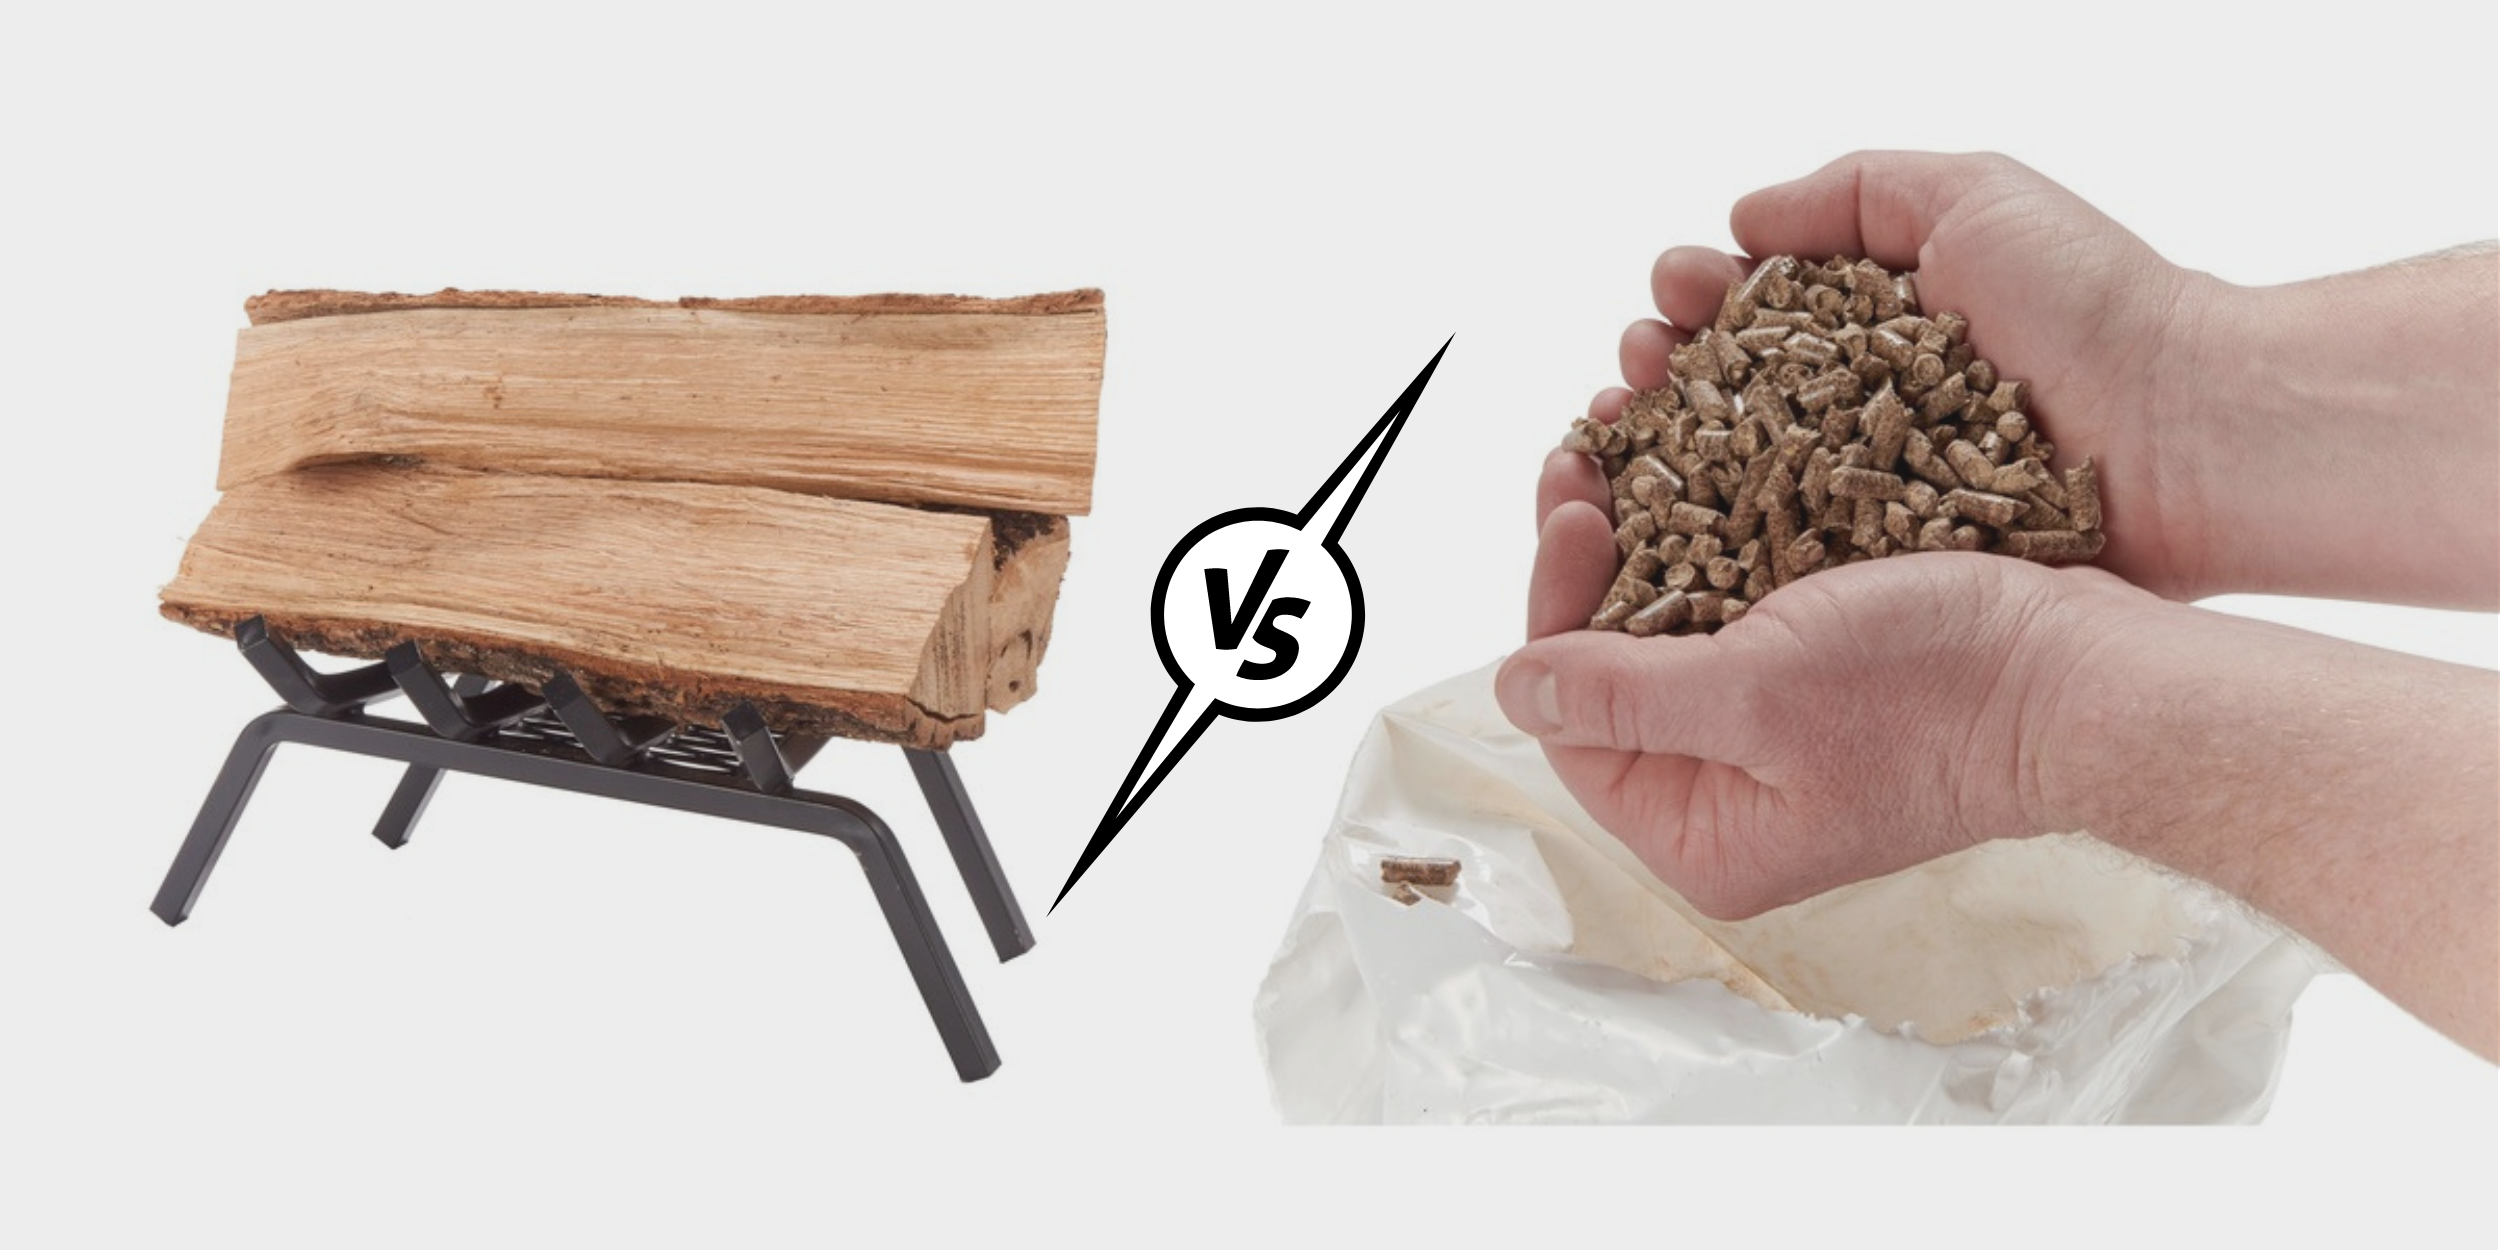 Fueling Your Fire: Pellets vs. Logs